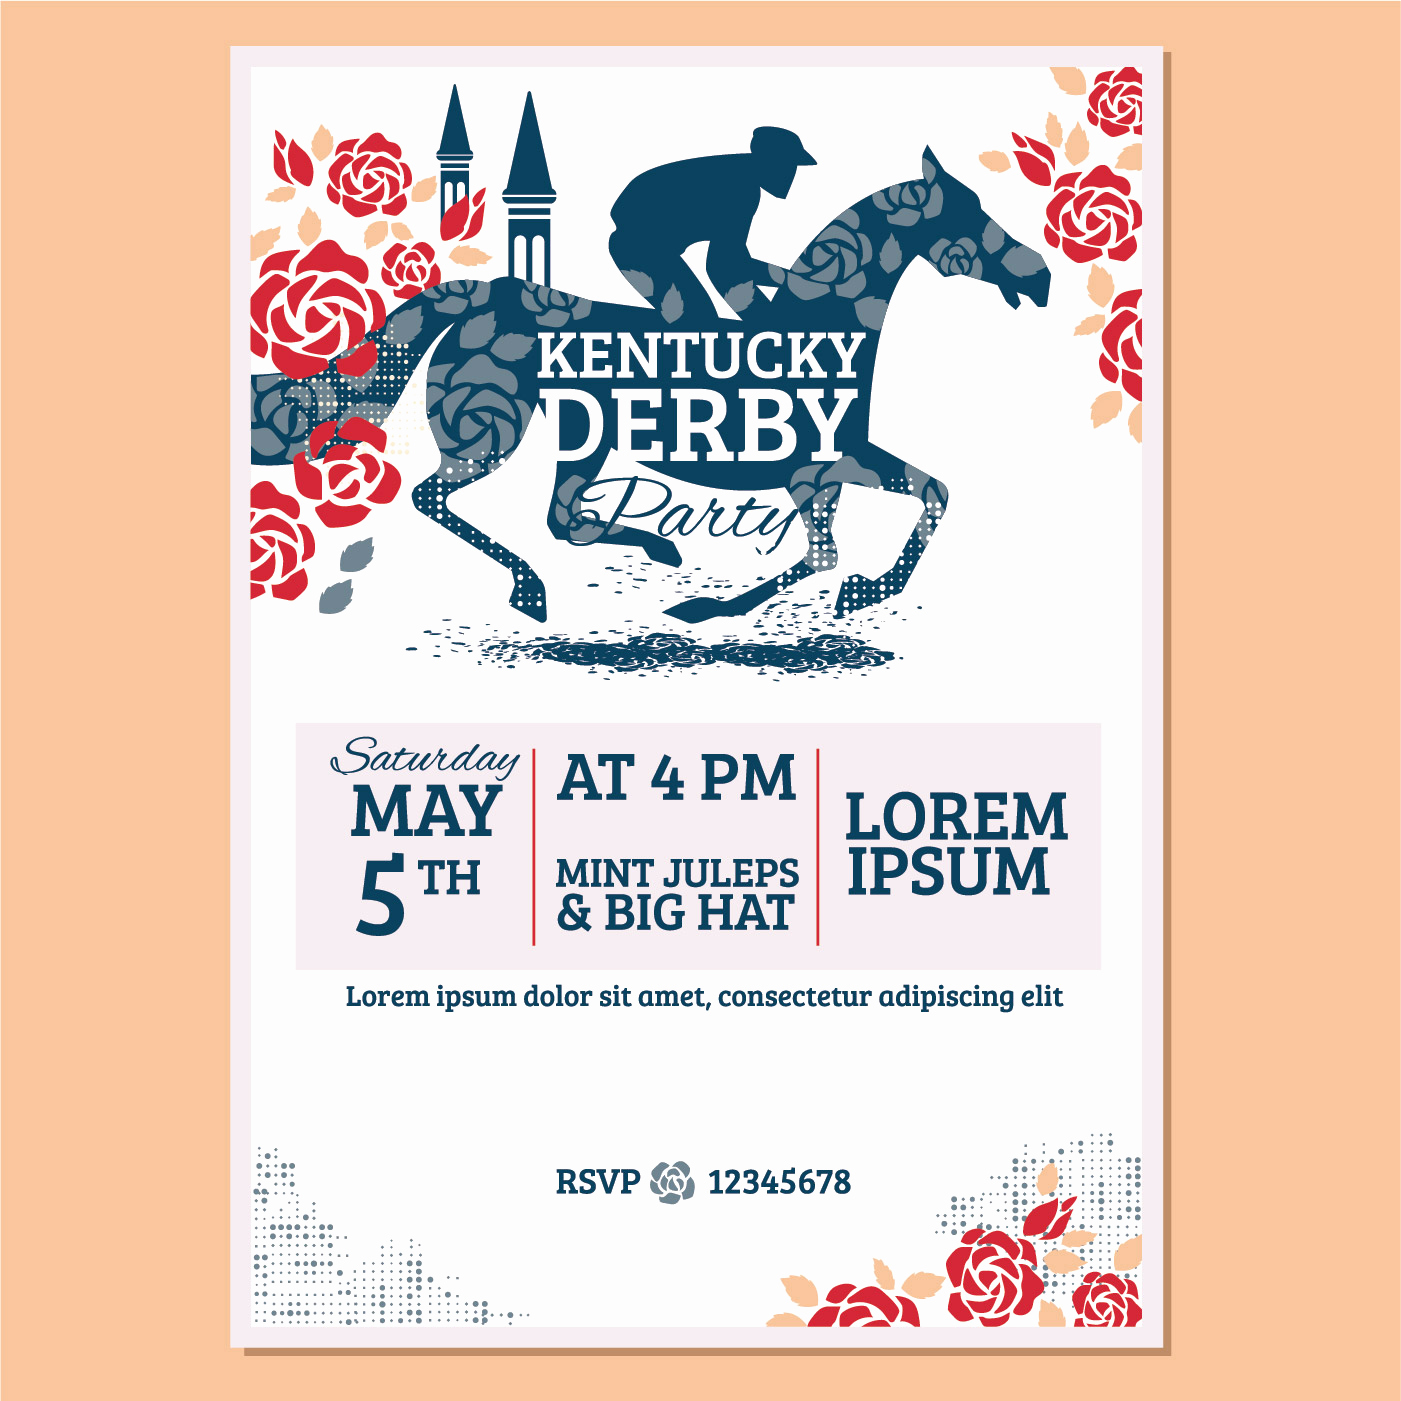 Kentucky Derby Invitation Wording Luxury Kentucky Derby Party Invitation Classic Style with Rose